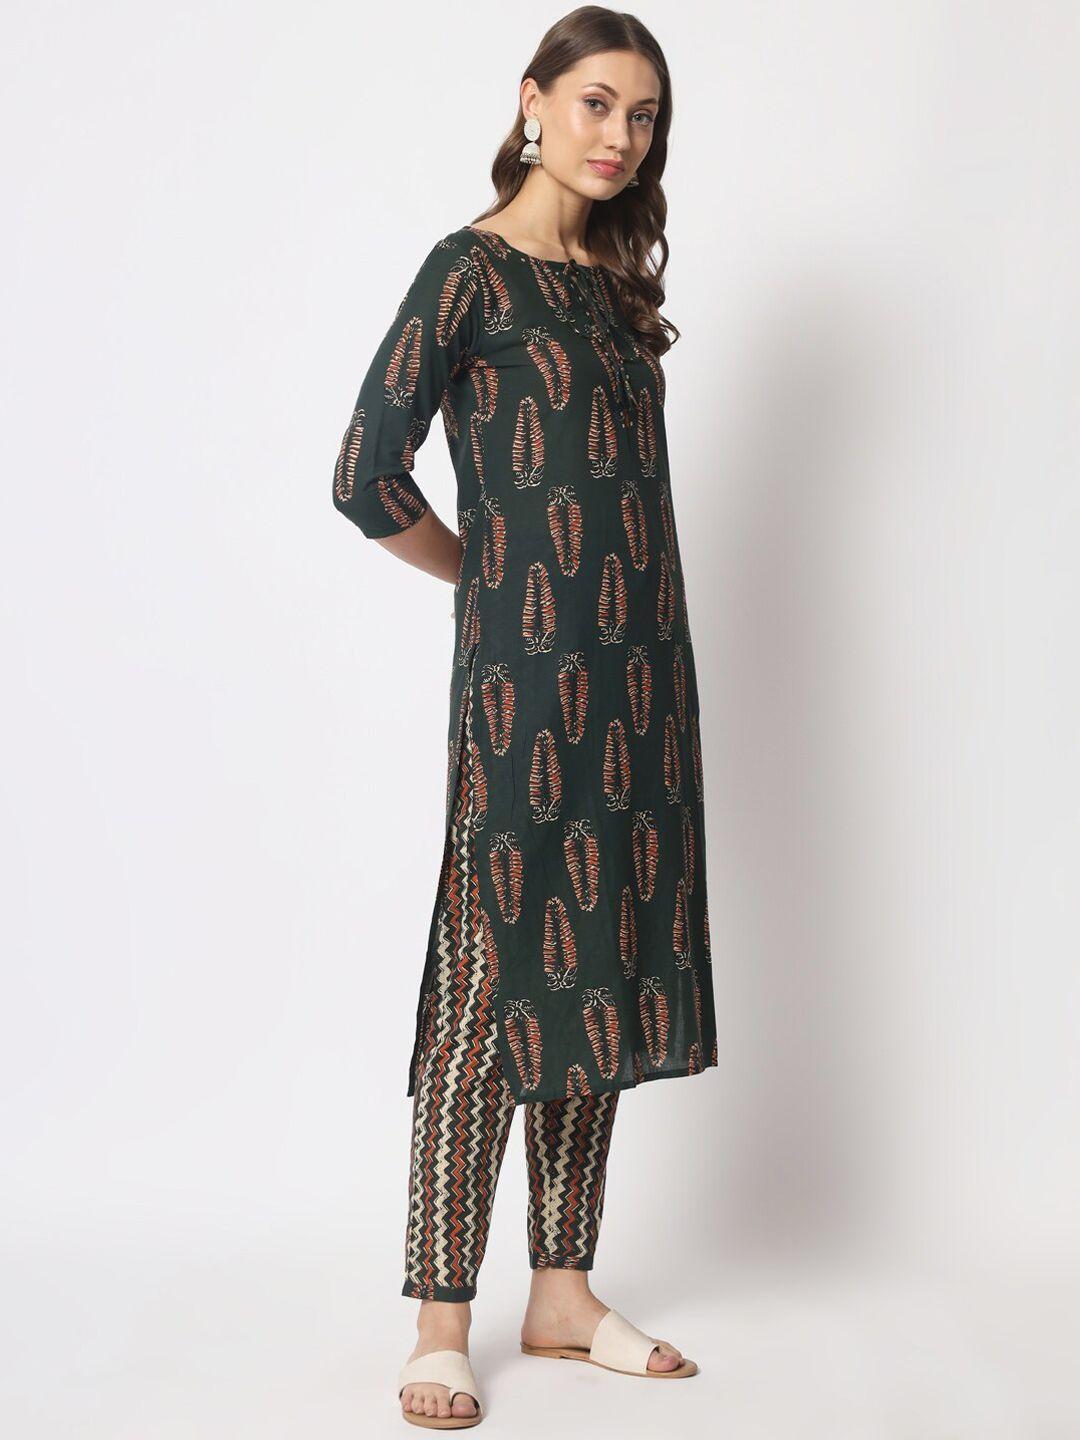 mishpra ethnic motifs printed sequinned pure cotton kurta with trousers & dupatta